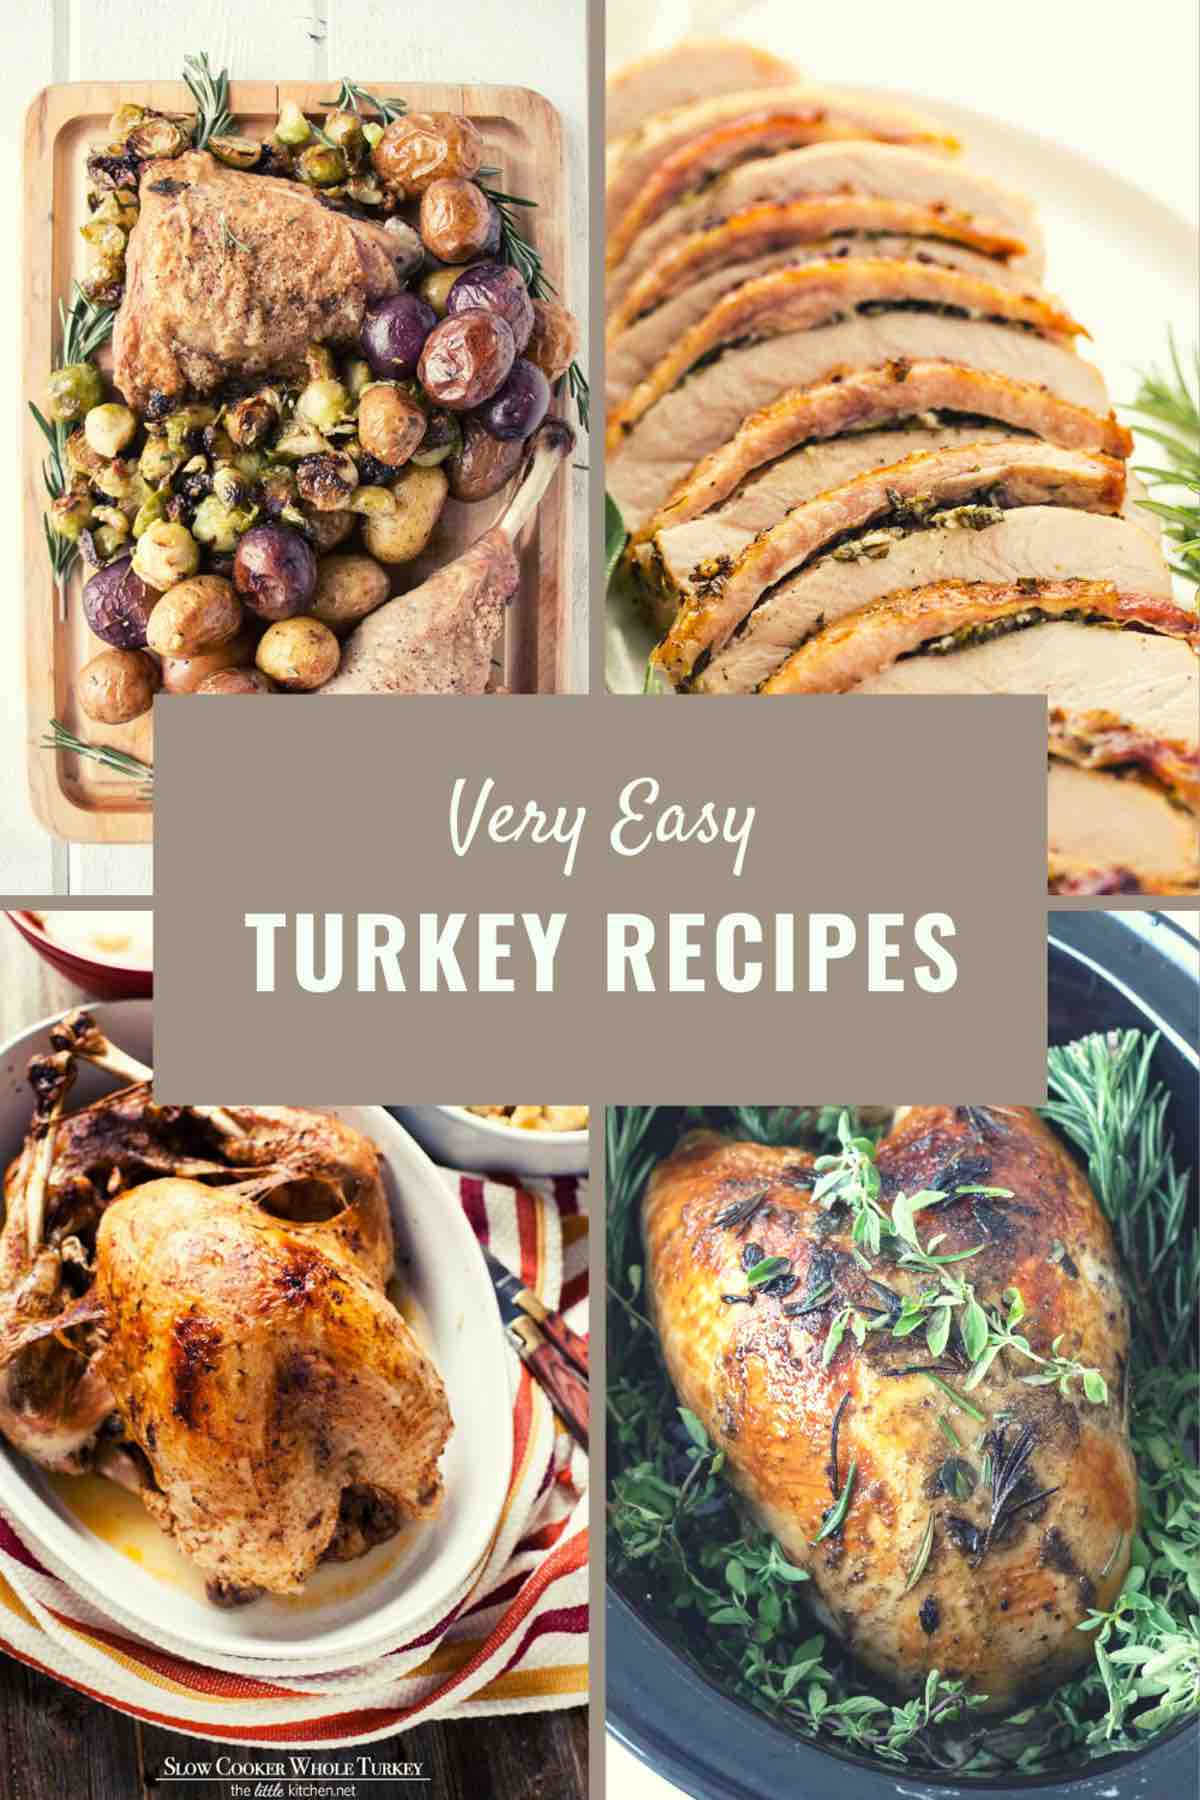 Easy turkey recipe ideas for a Friendsgiving party.